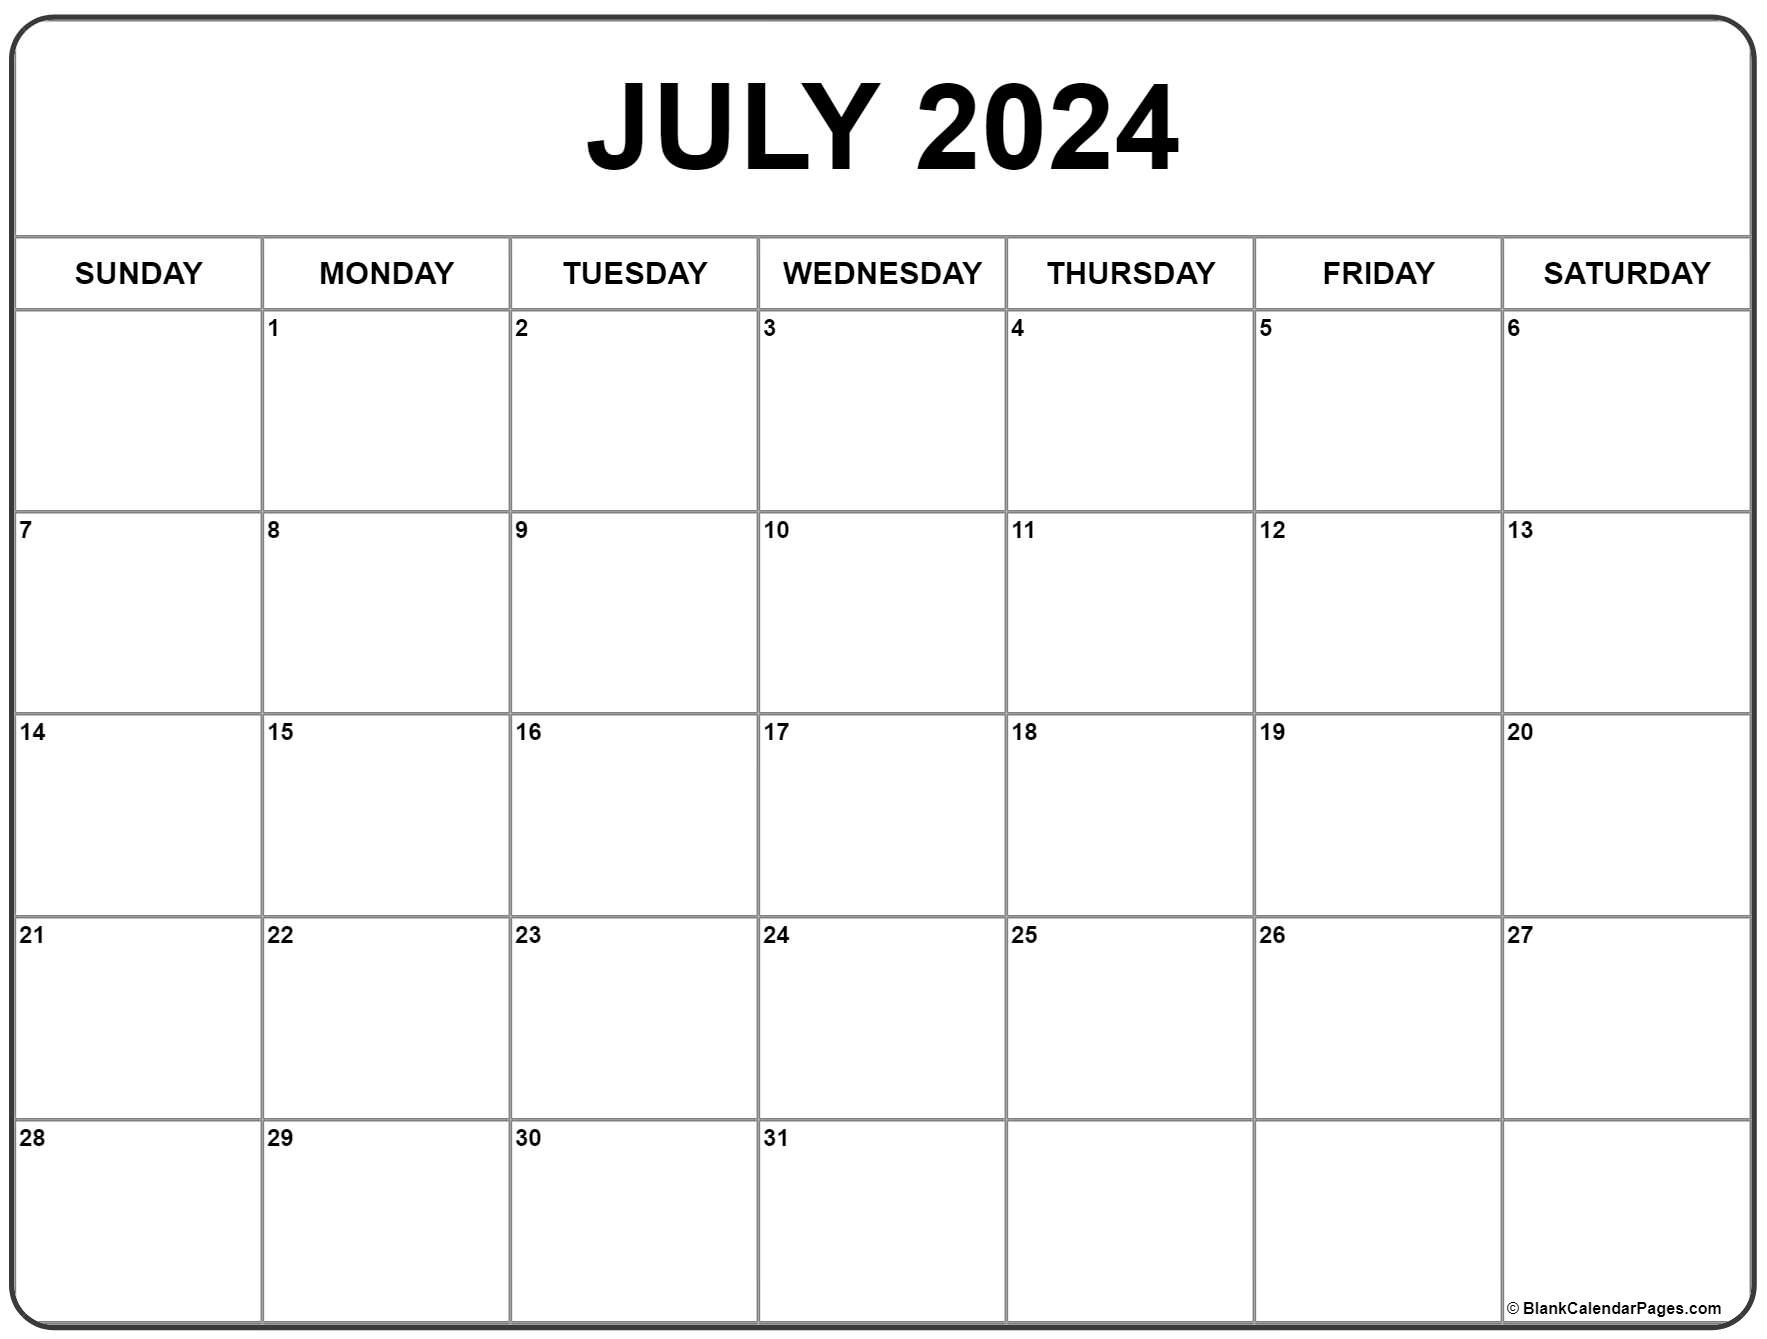 July 2024 Calendar | Free Printable Calendar for Free July Calendar 2024 Printable